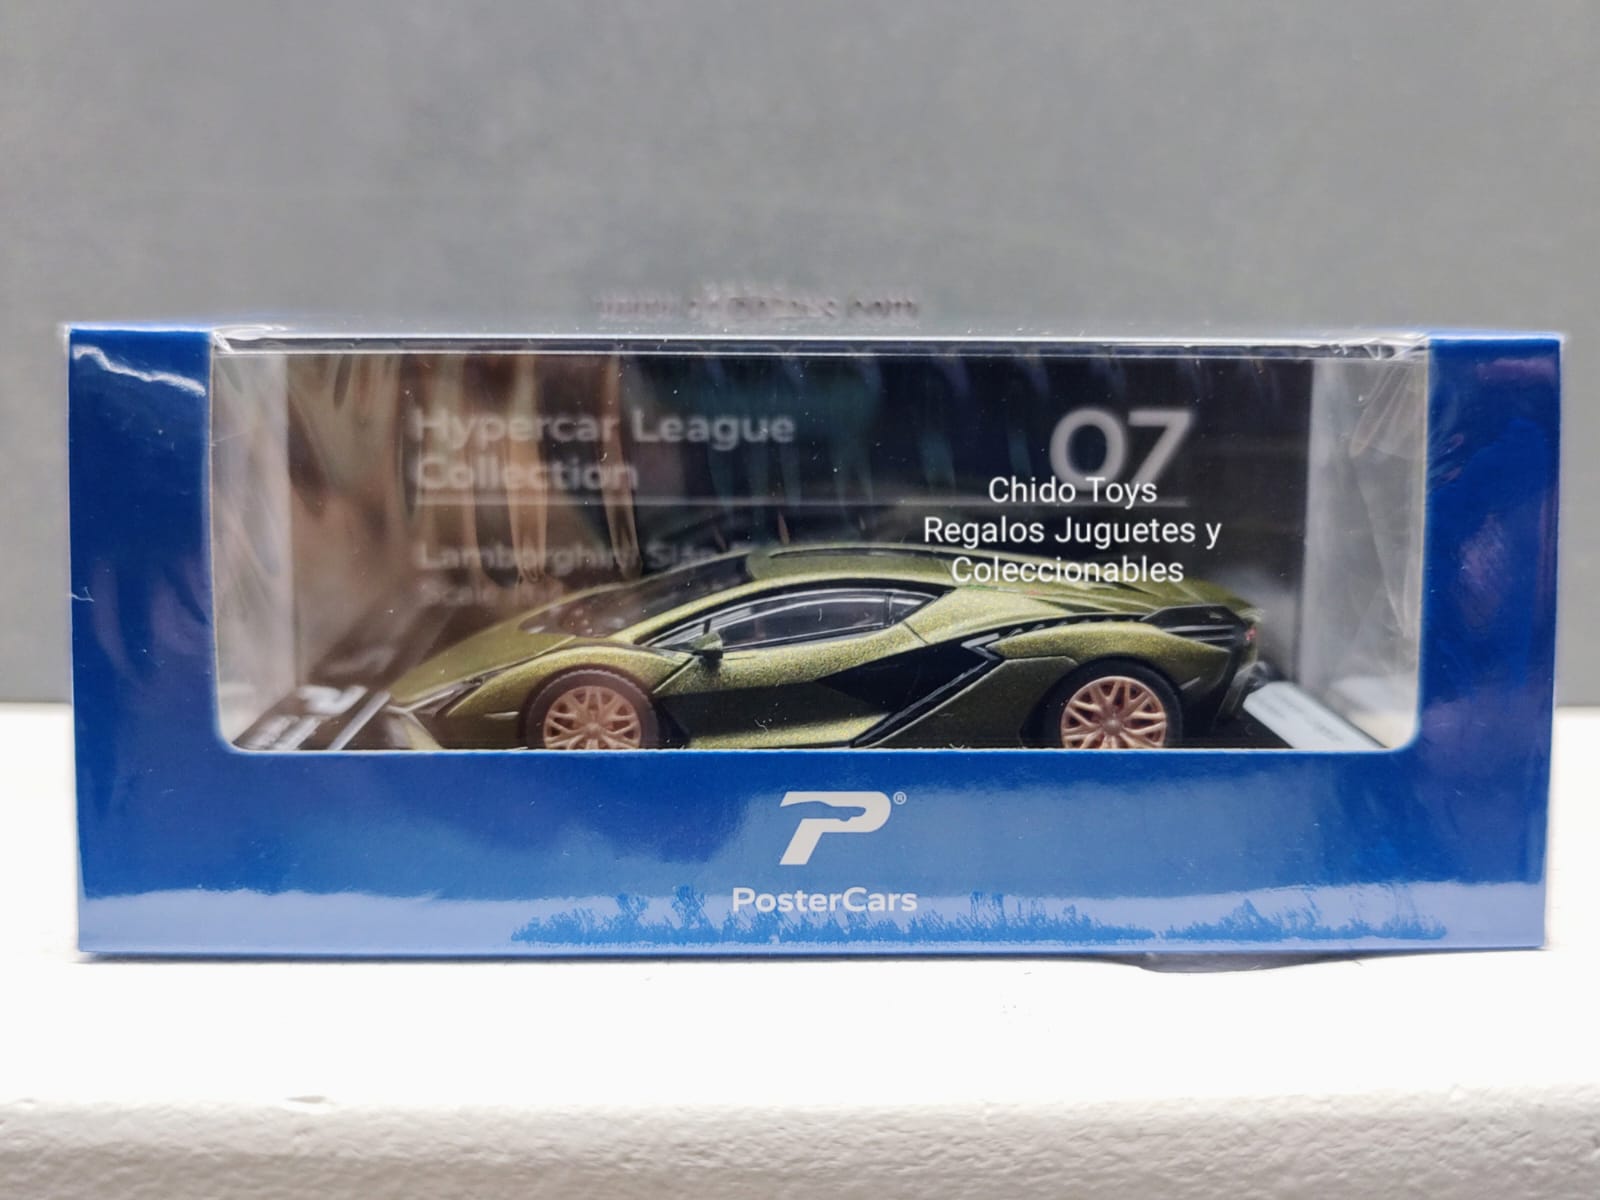 Auto a escala marca PosterCars, modelo Lamborghini Sian FKP 37 – Chido Toys